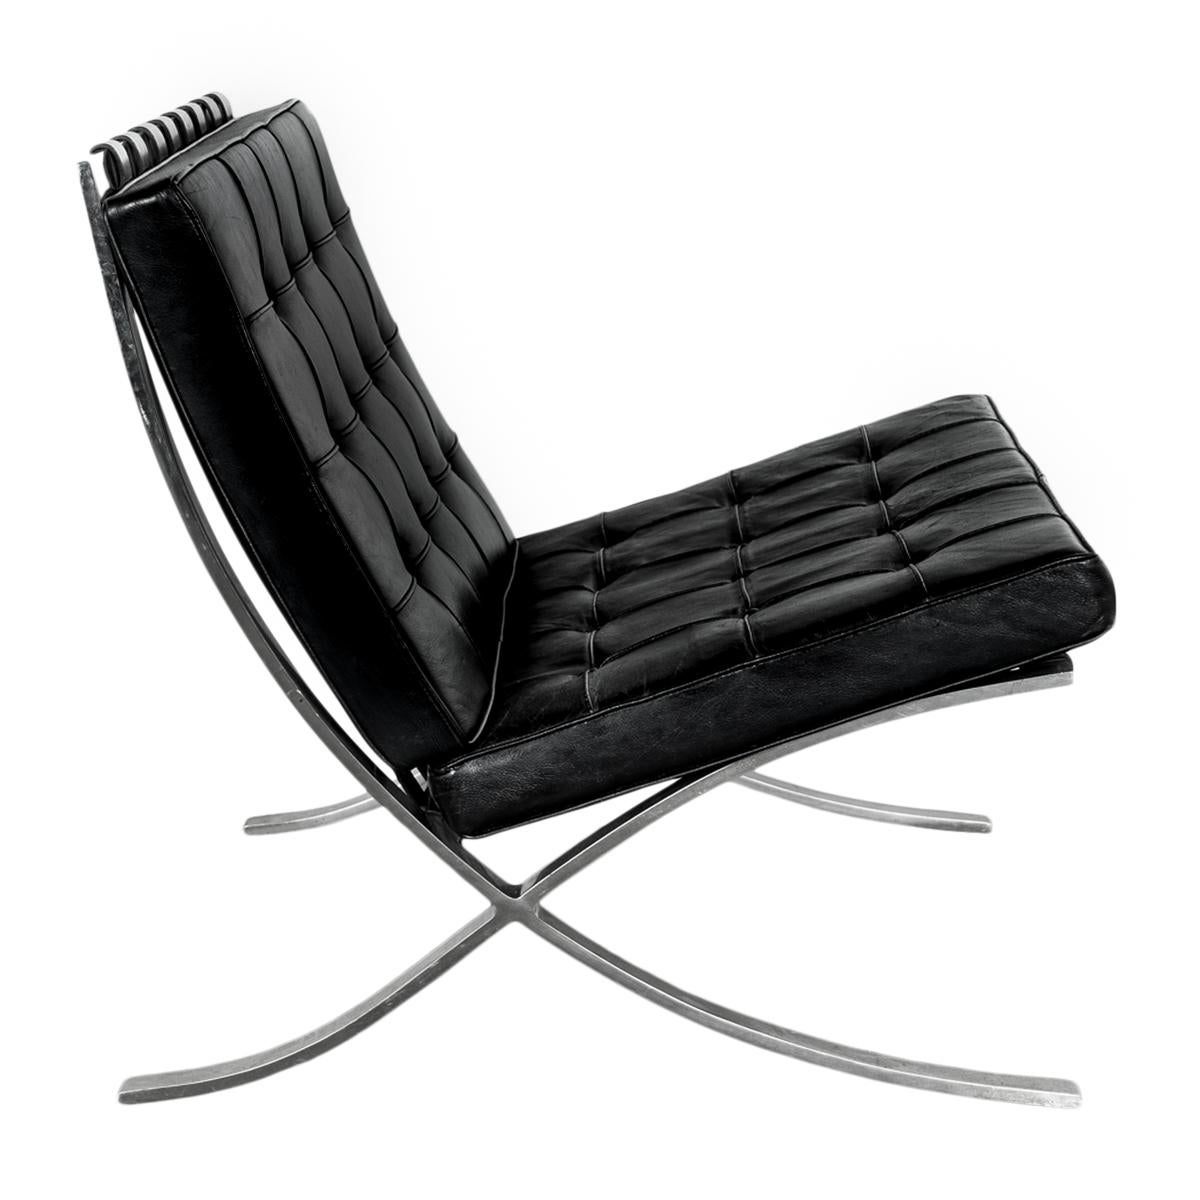 Frühes Paar MCM Knoll Barcelona-Stühle, Mies van der Rohe 1961, schwarzes Leder im Angebot 4